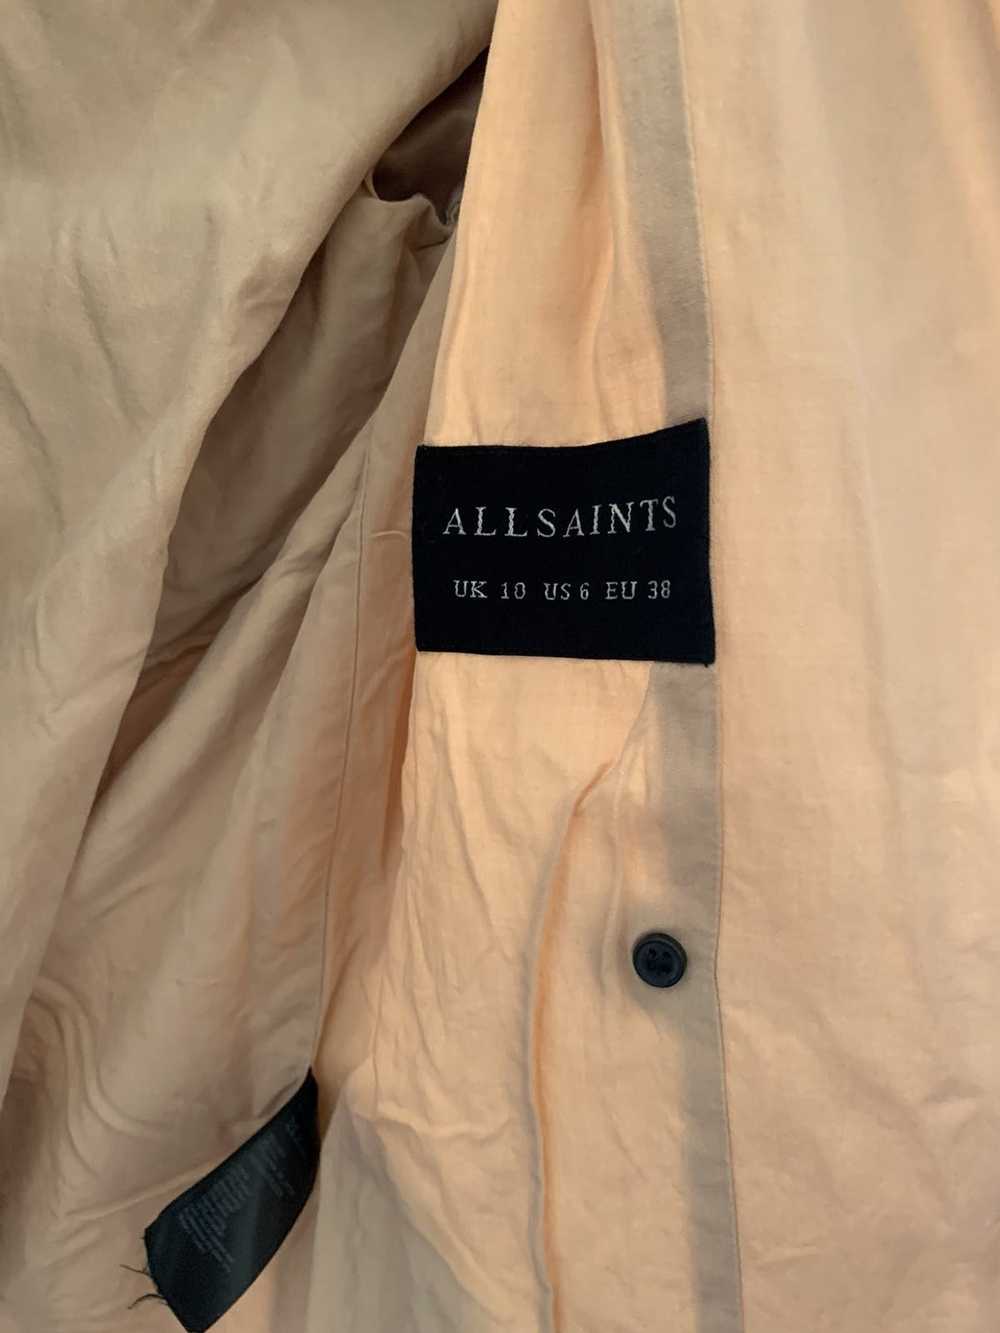 Allsaints $500 AllSaints Overcoat - image 2